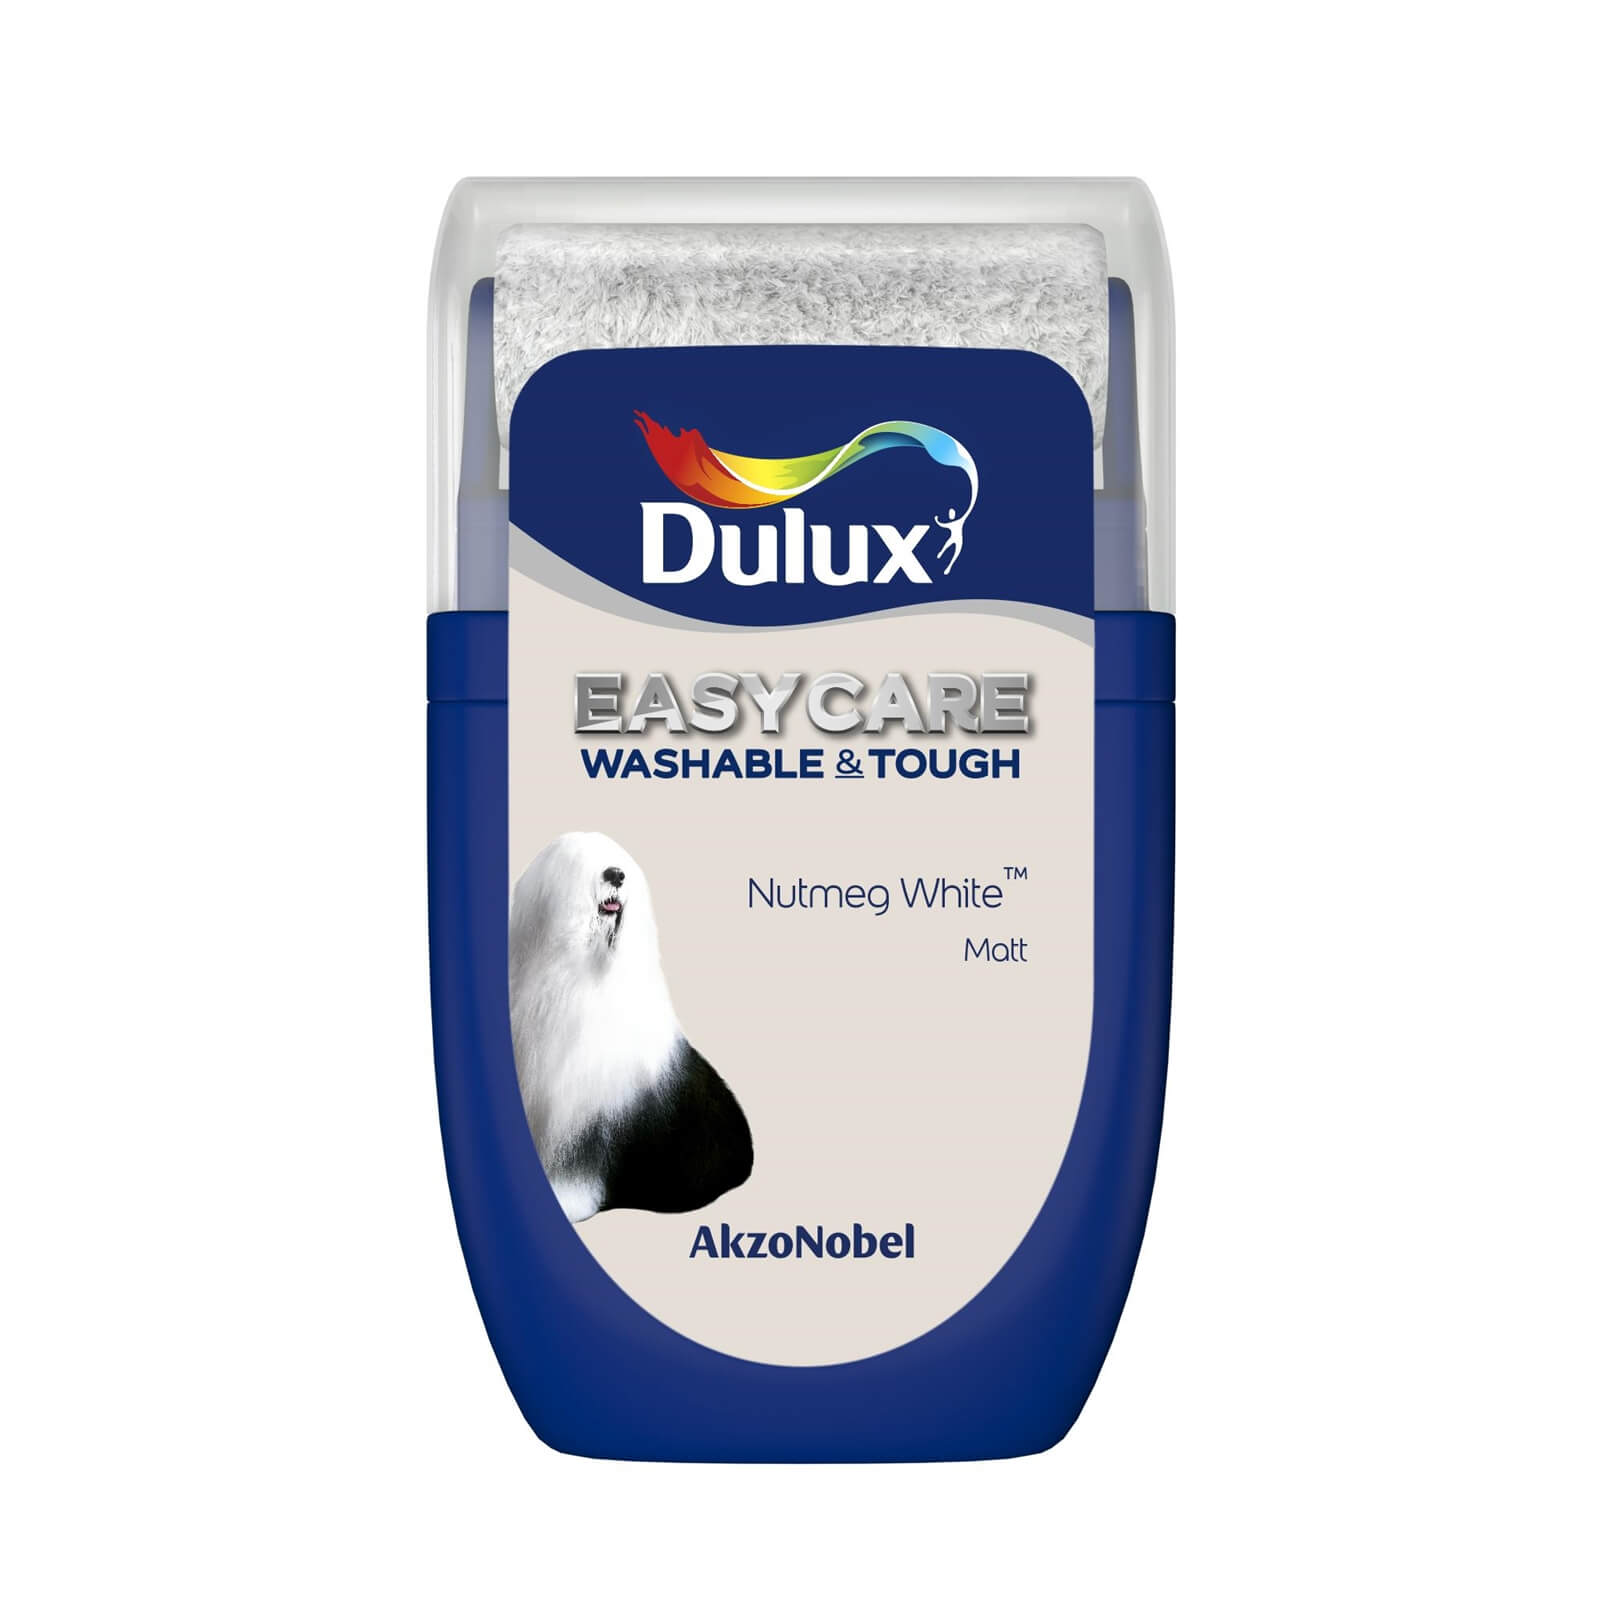 Dulux Easycare Washable & Tough Matt Paint Nutmeg White - Tester 30ml